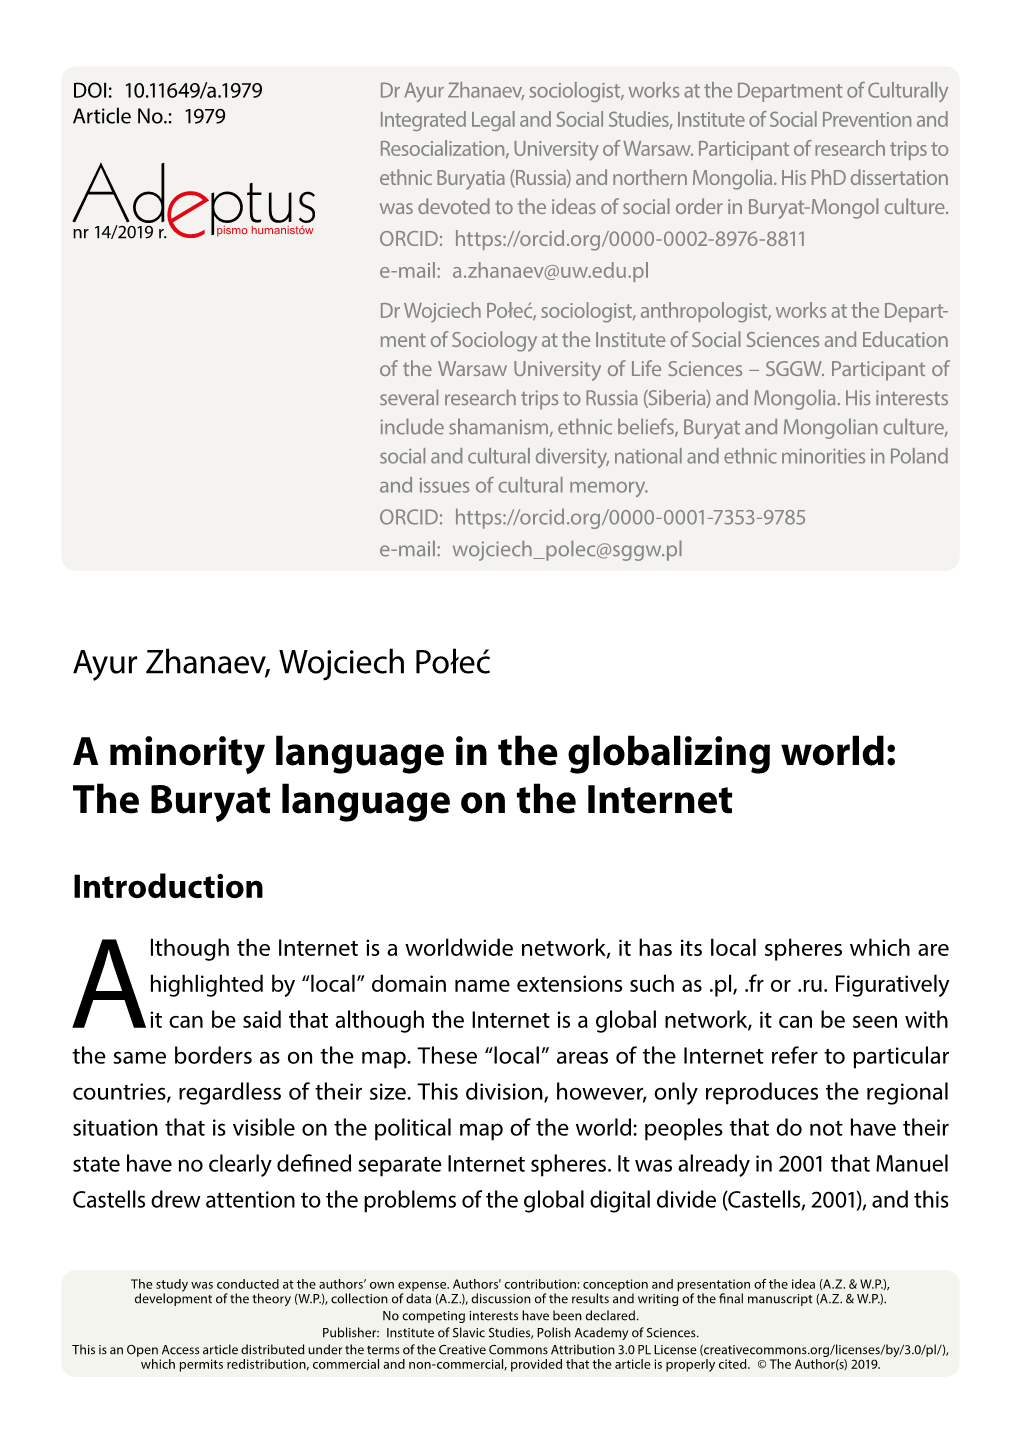 The Buryat Language on the Internet